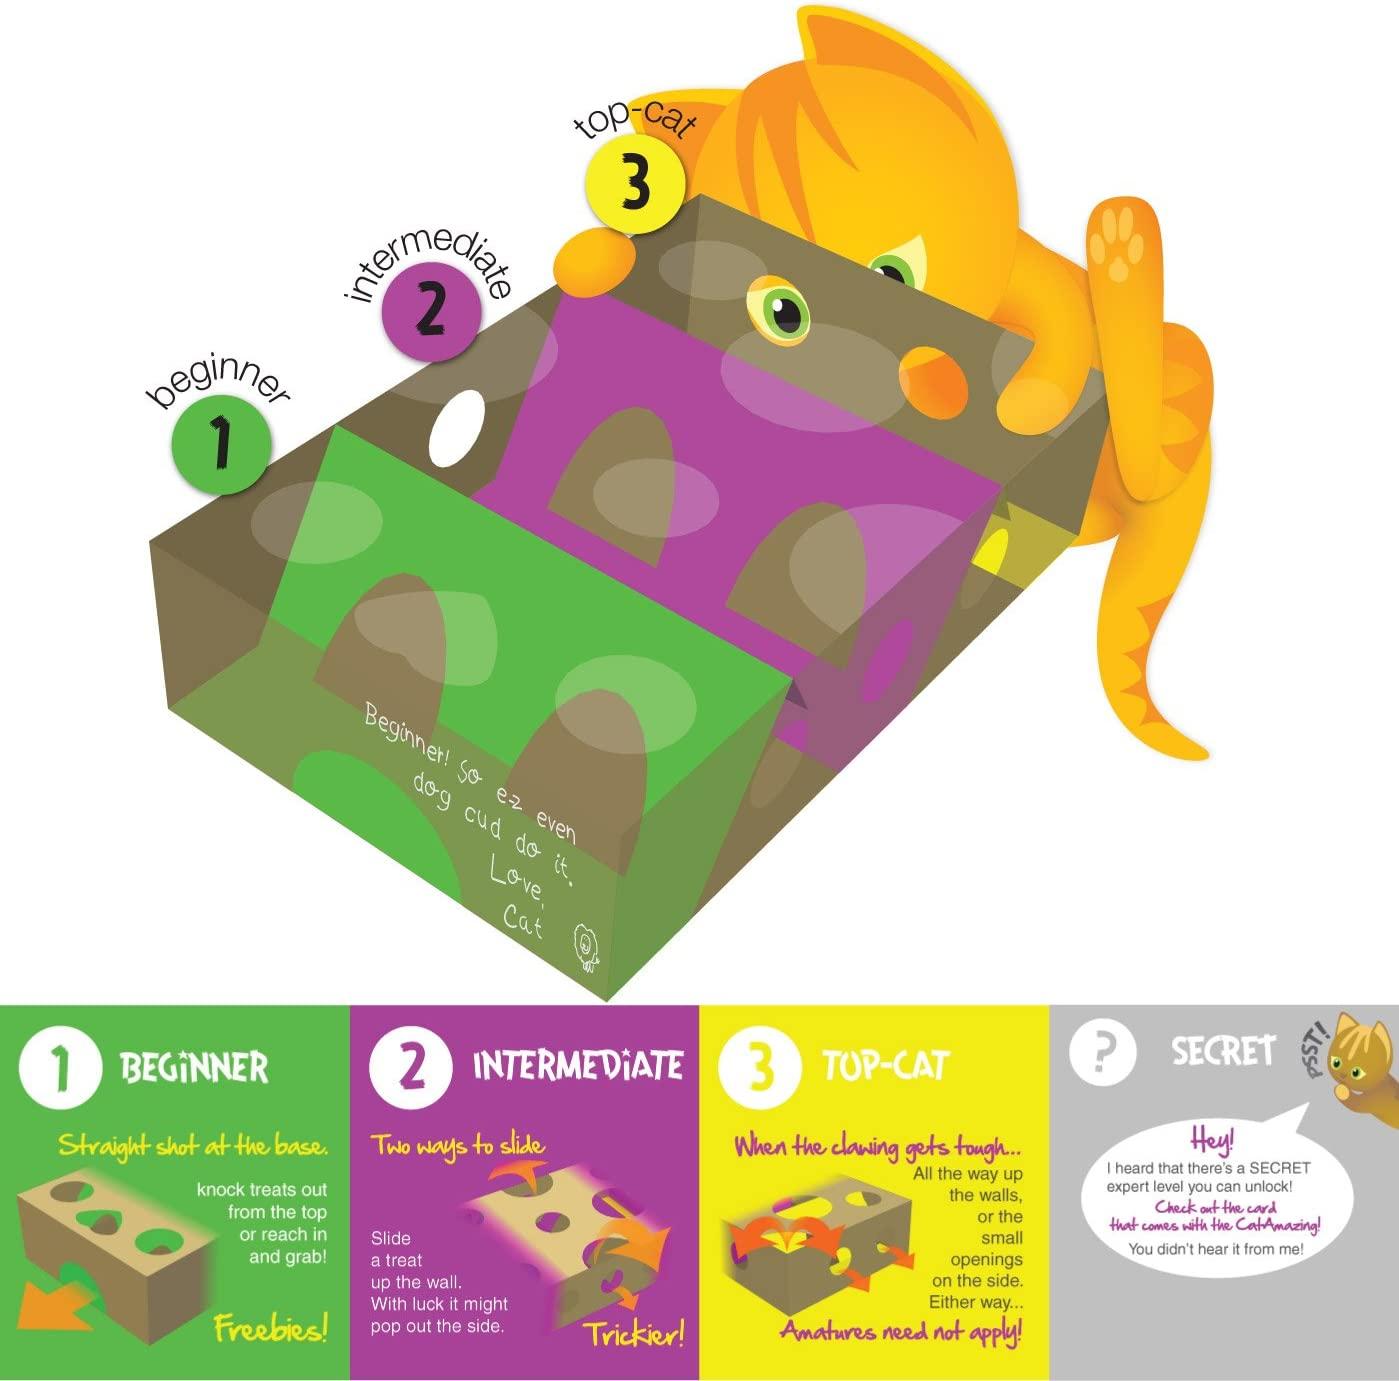 Cat Amazing Sliders - Interactive Treat Puzzle Cat Toy - Active Food Puzzle Feeder